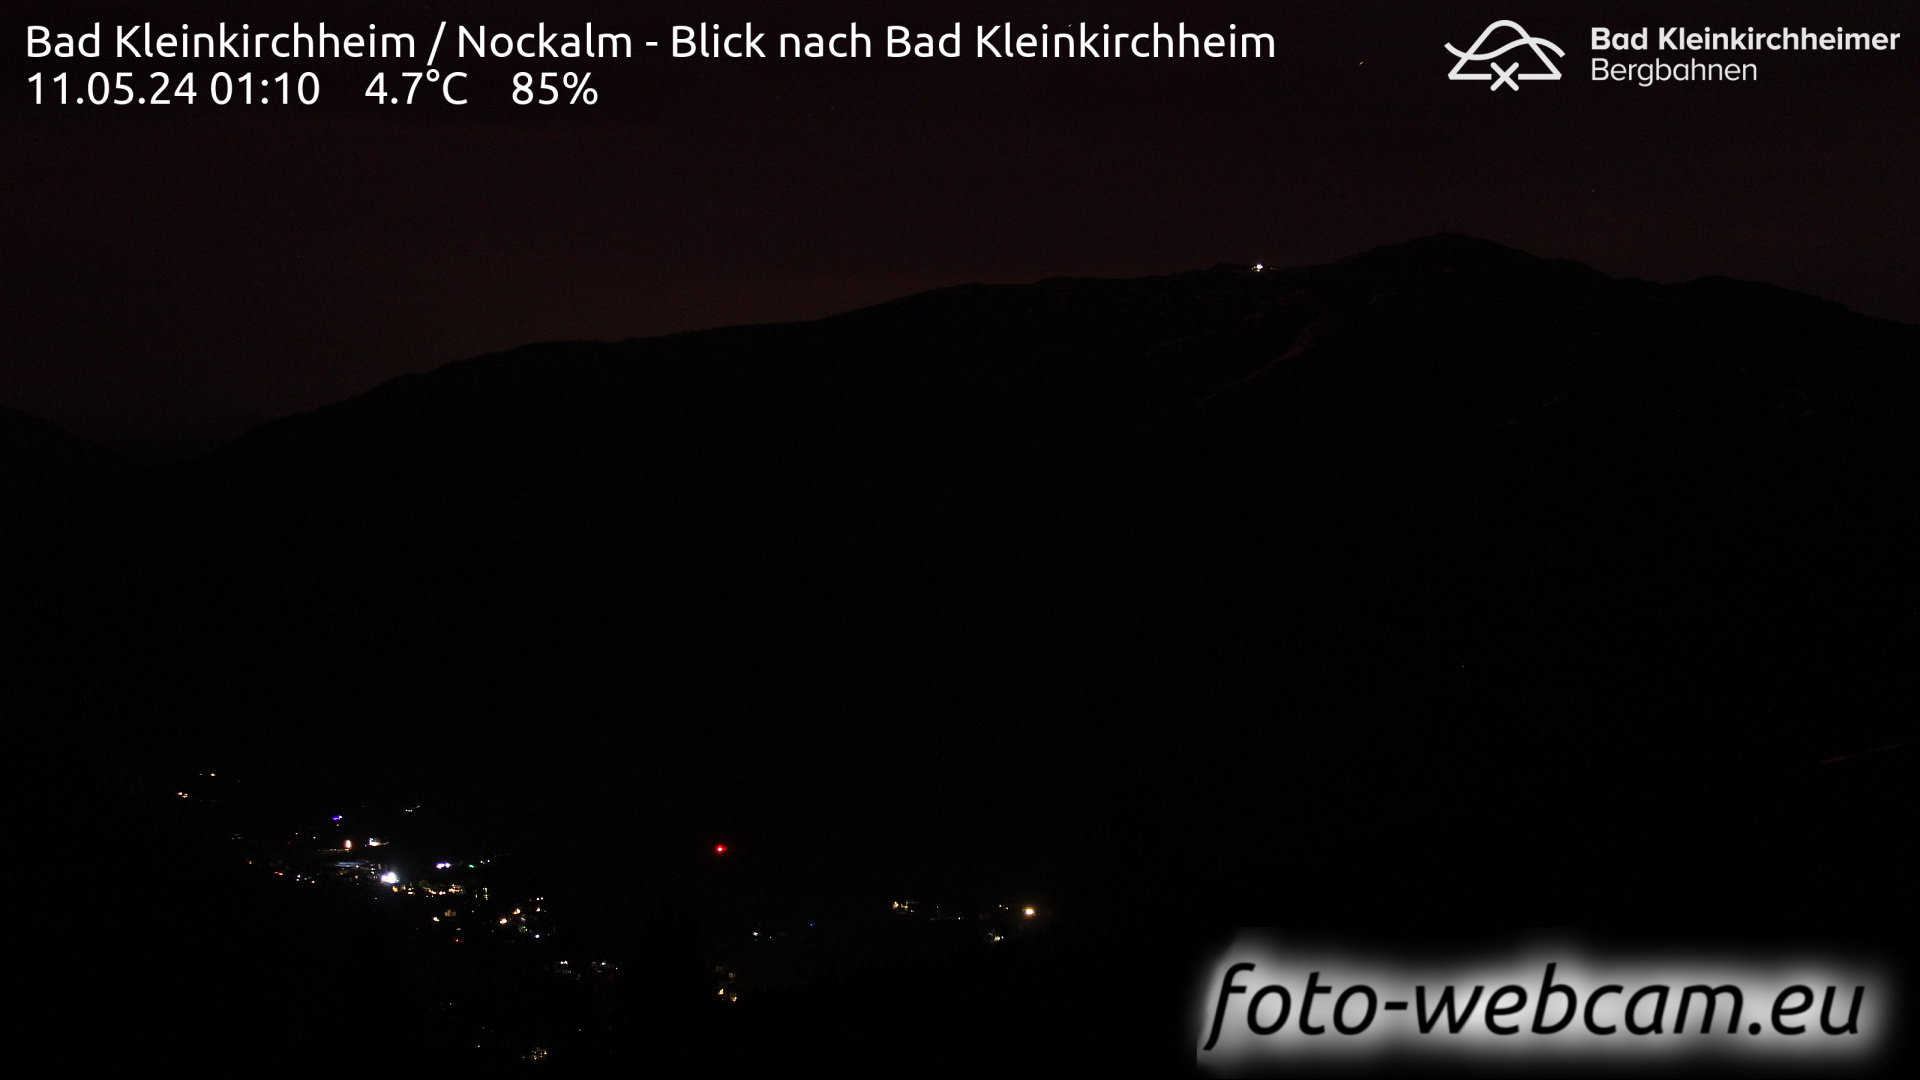 Bad Kleinkirchheim Thu. 01:17